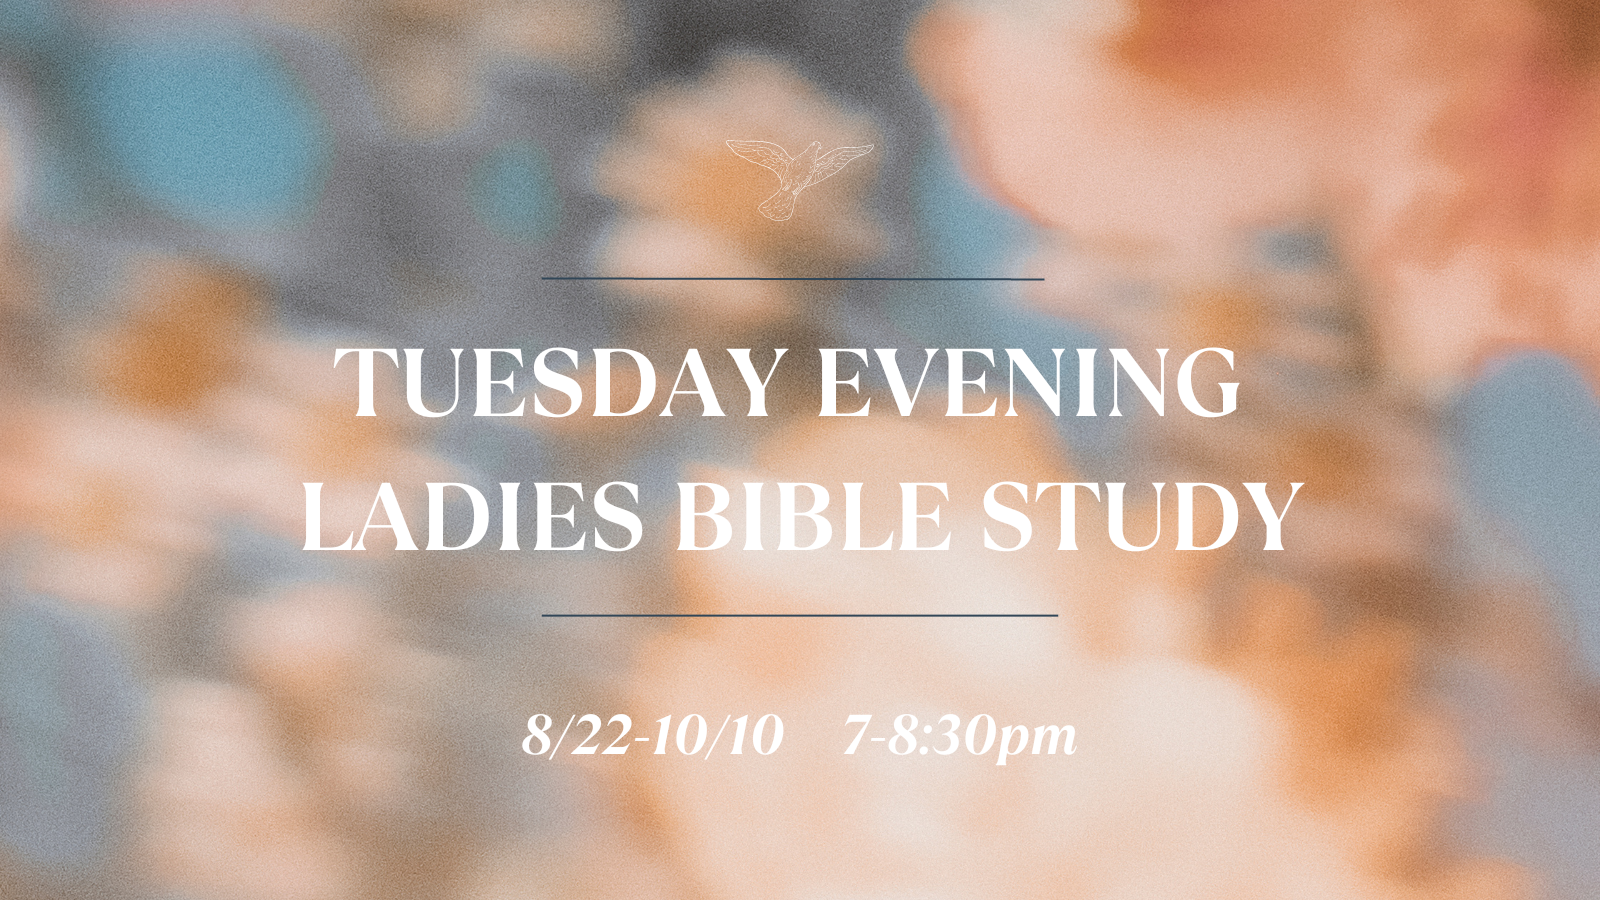 Tuesday evening ladies study image